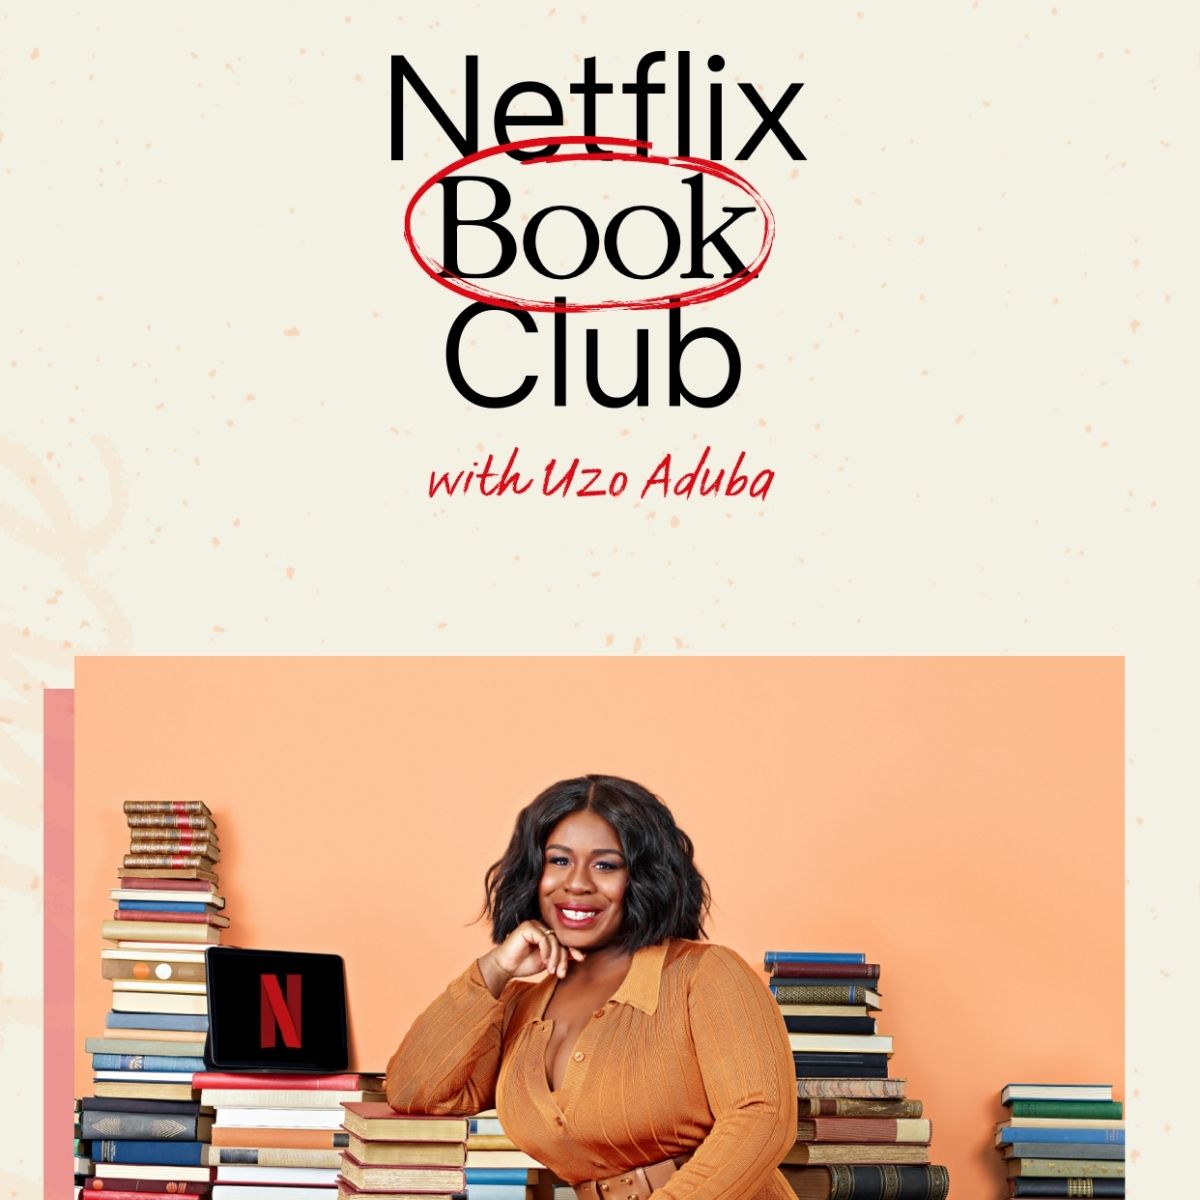 Netflix book club